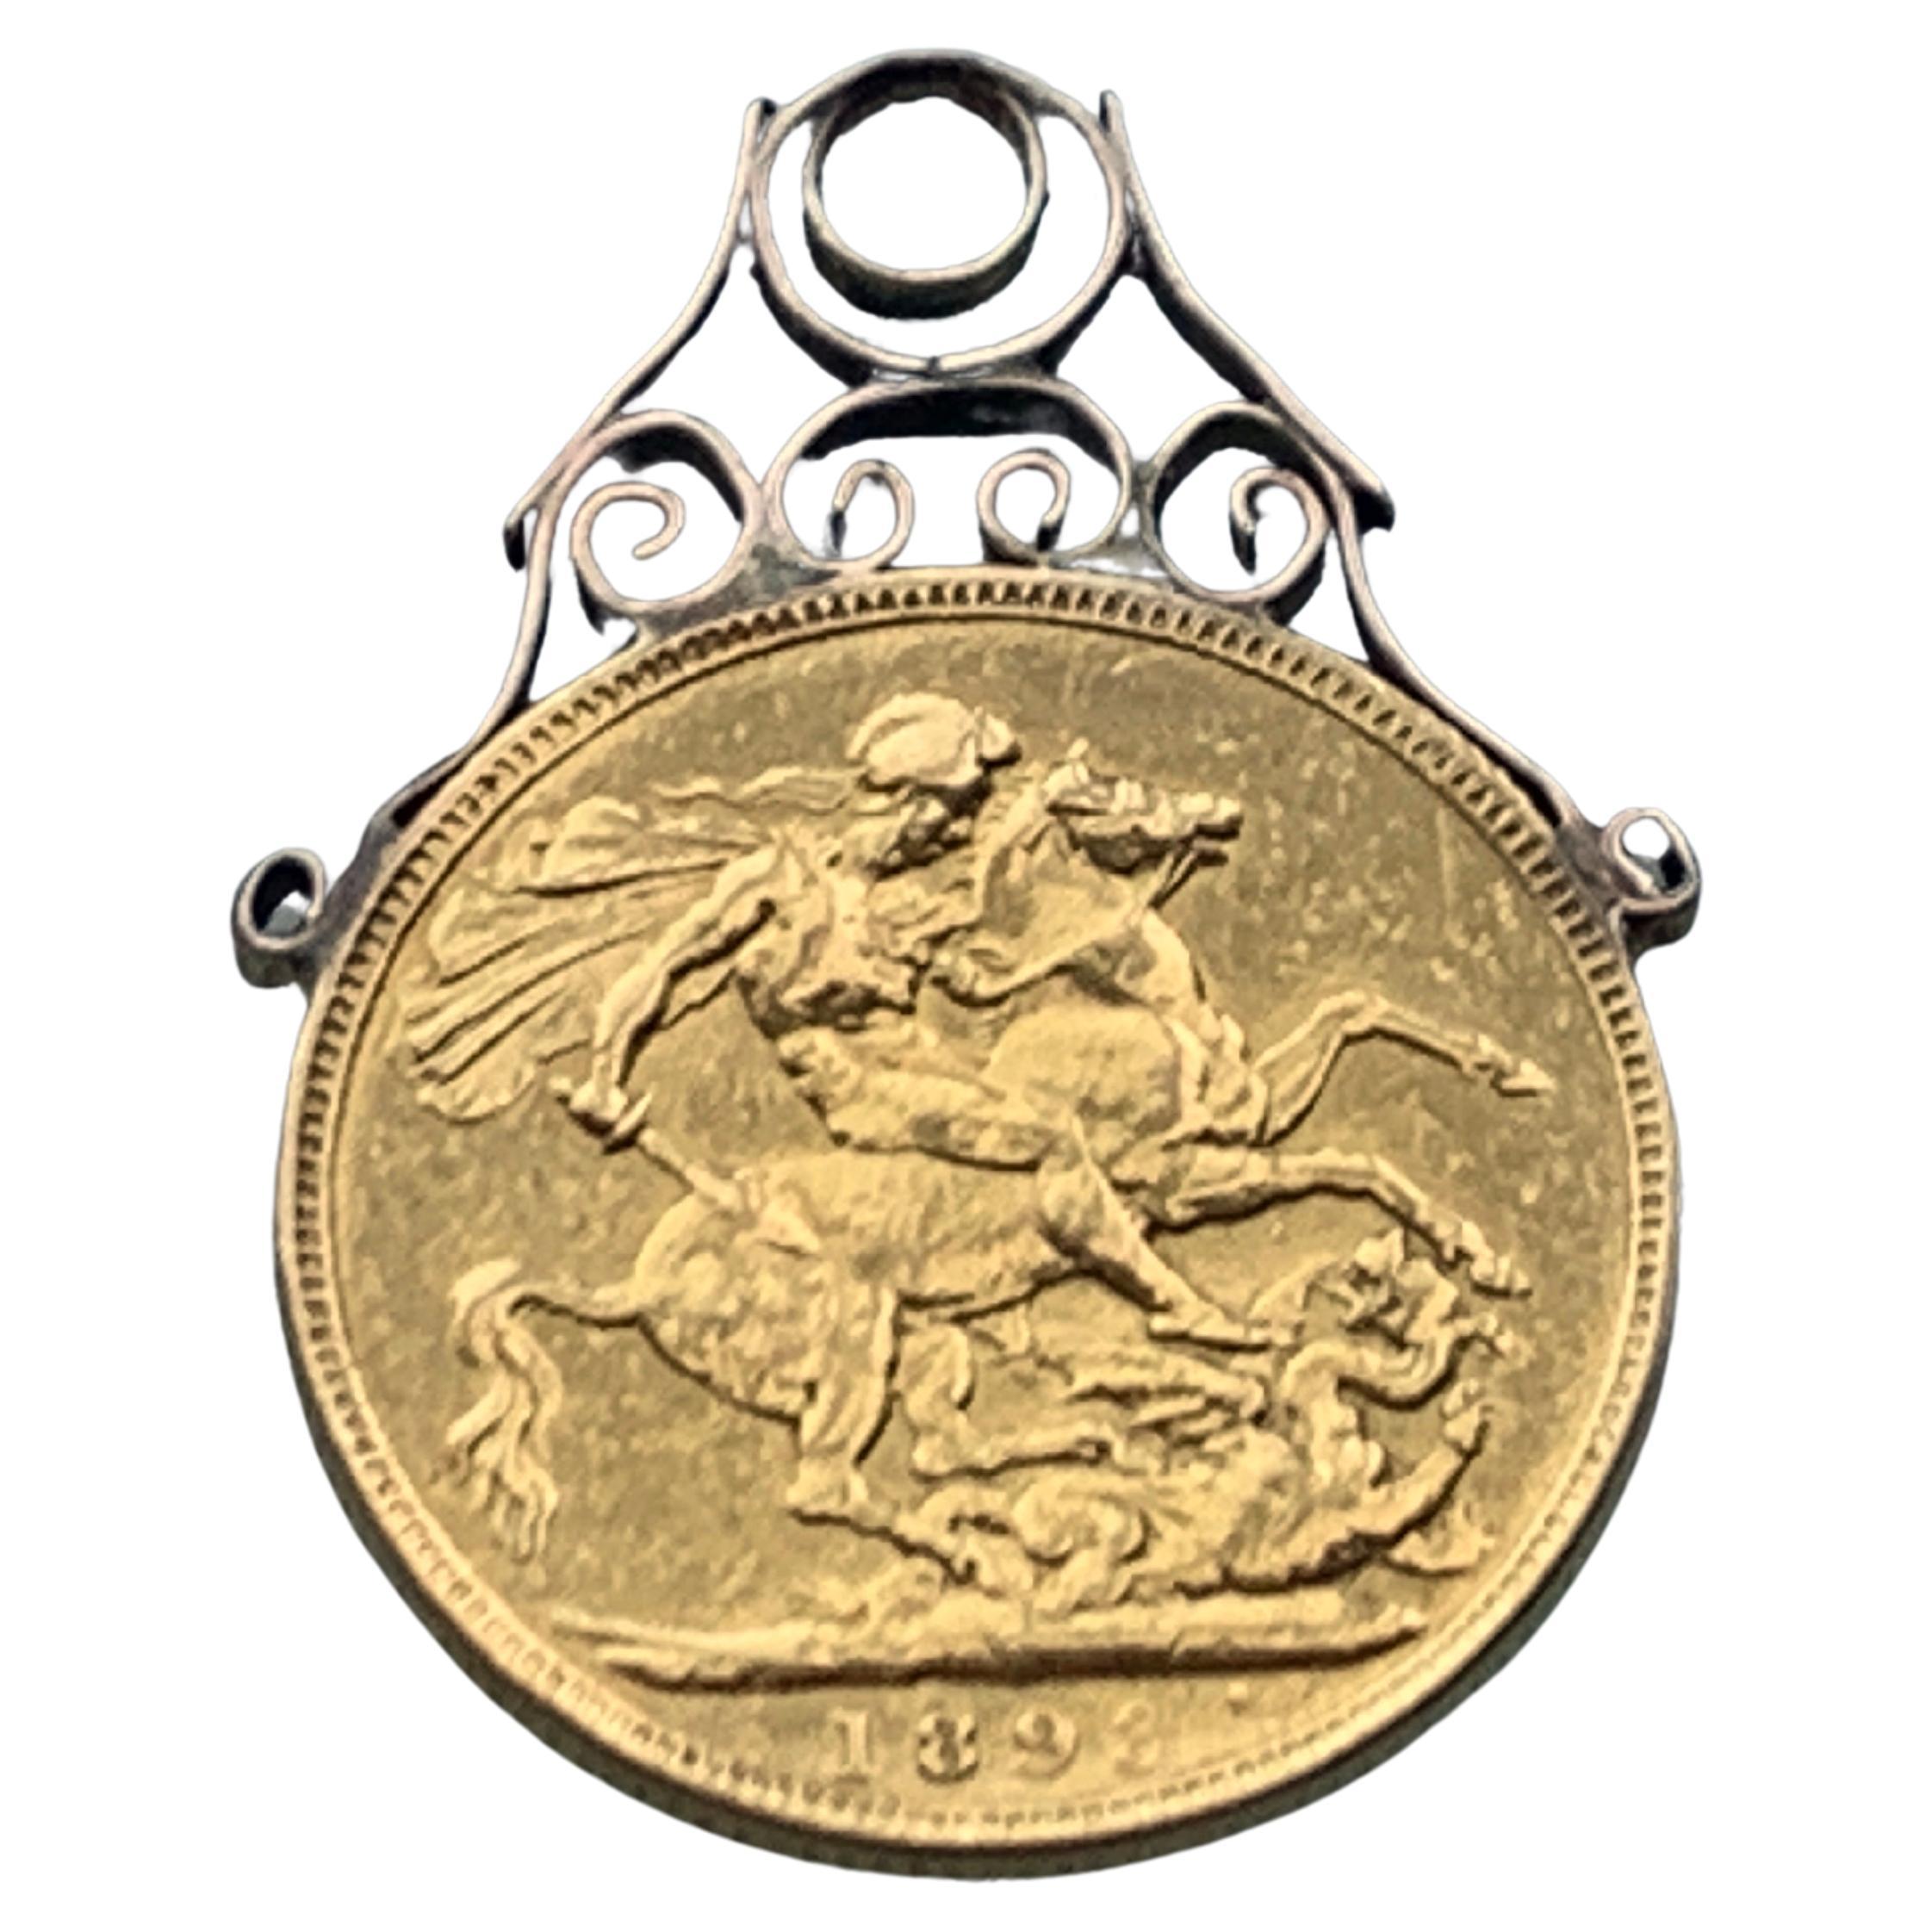 Antique 22ct Gold Sovereign Pendant